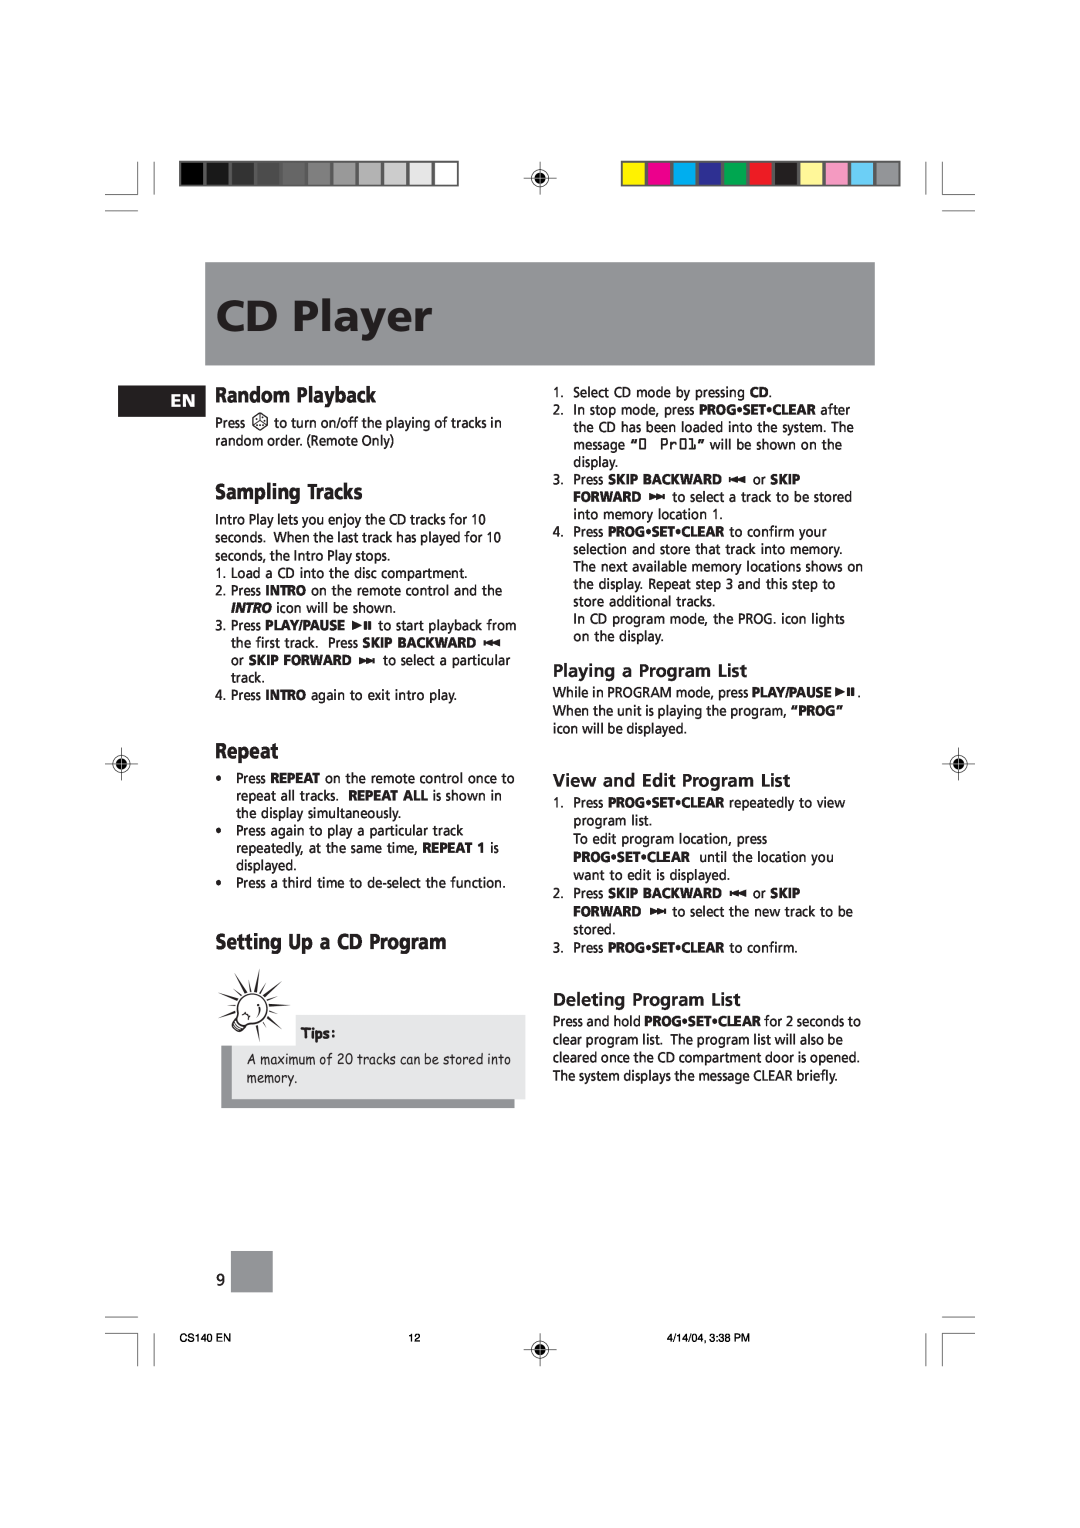 Technicolor - Thomson CS140 EN Random Playback, Sampling Tracks, Repeat, Setting Up a CD Program, Playing a Program List 